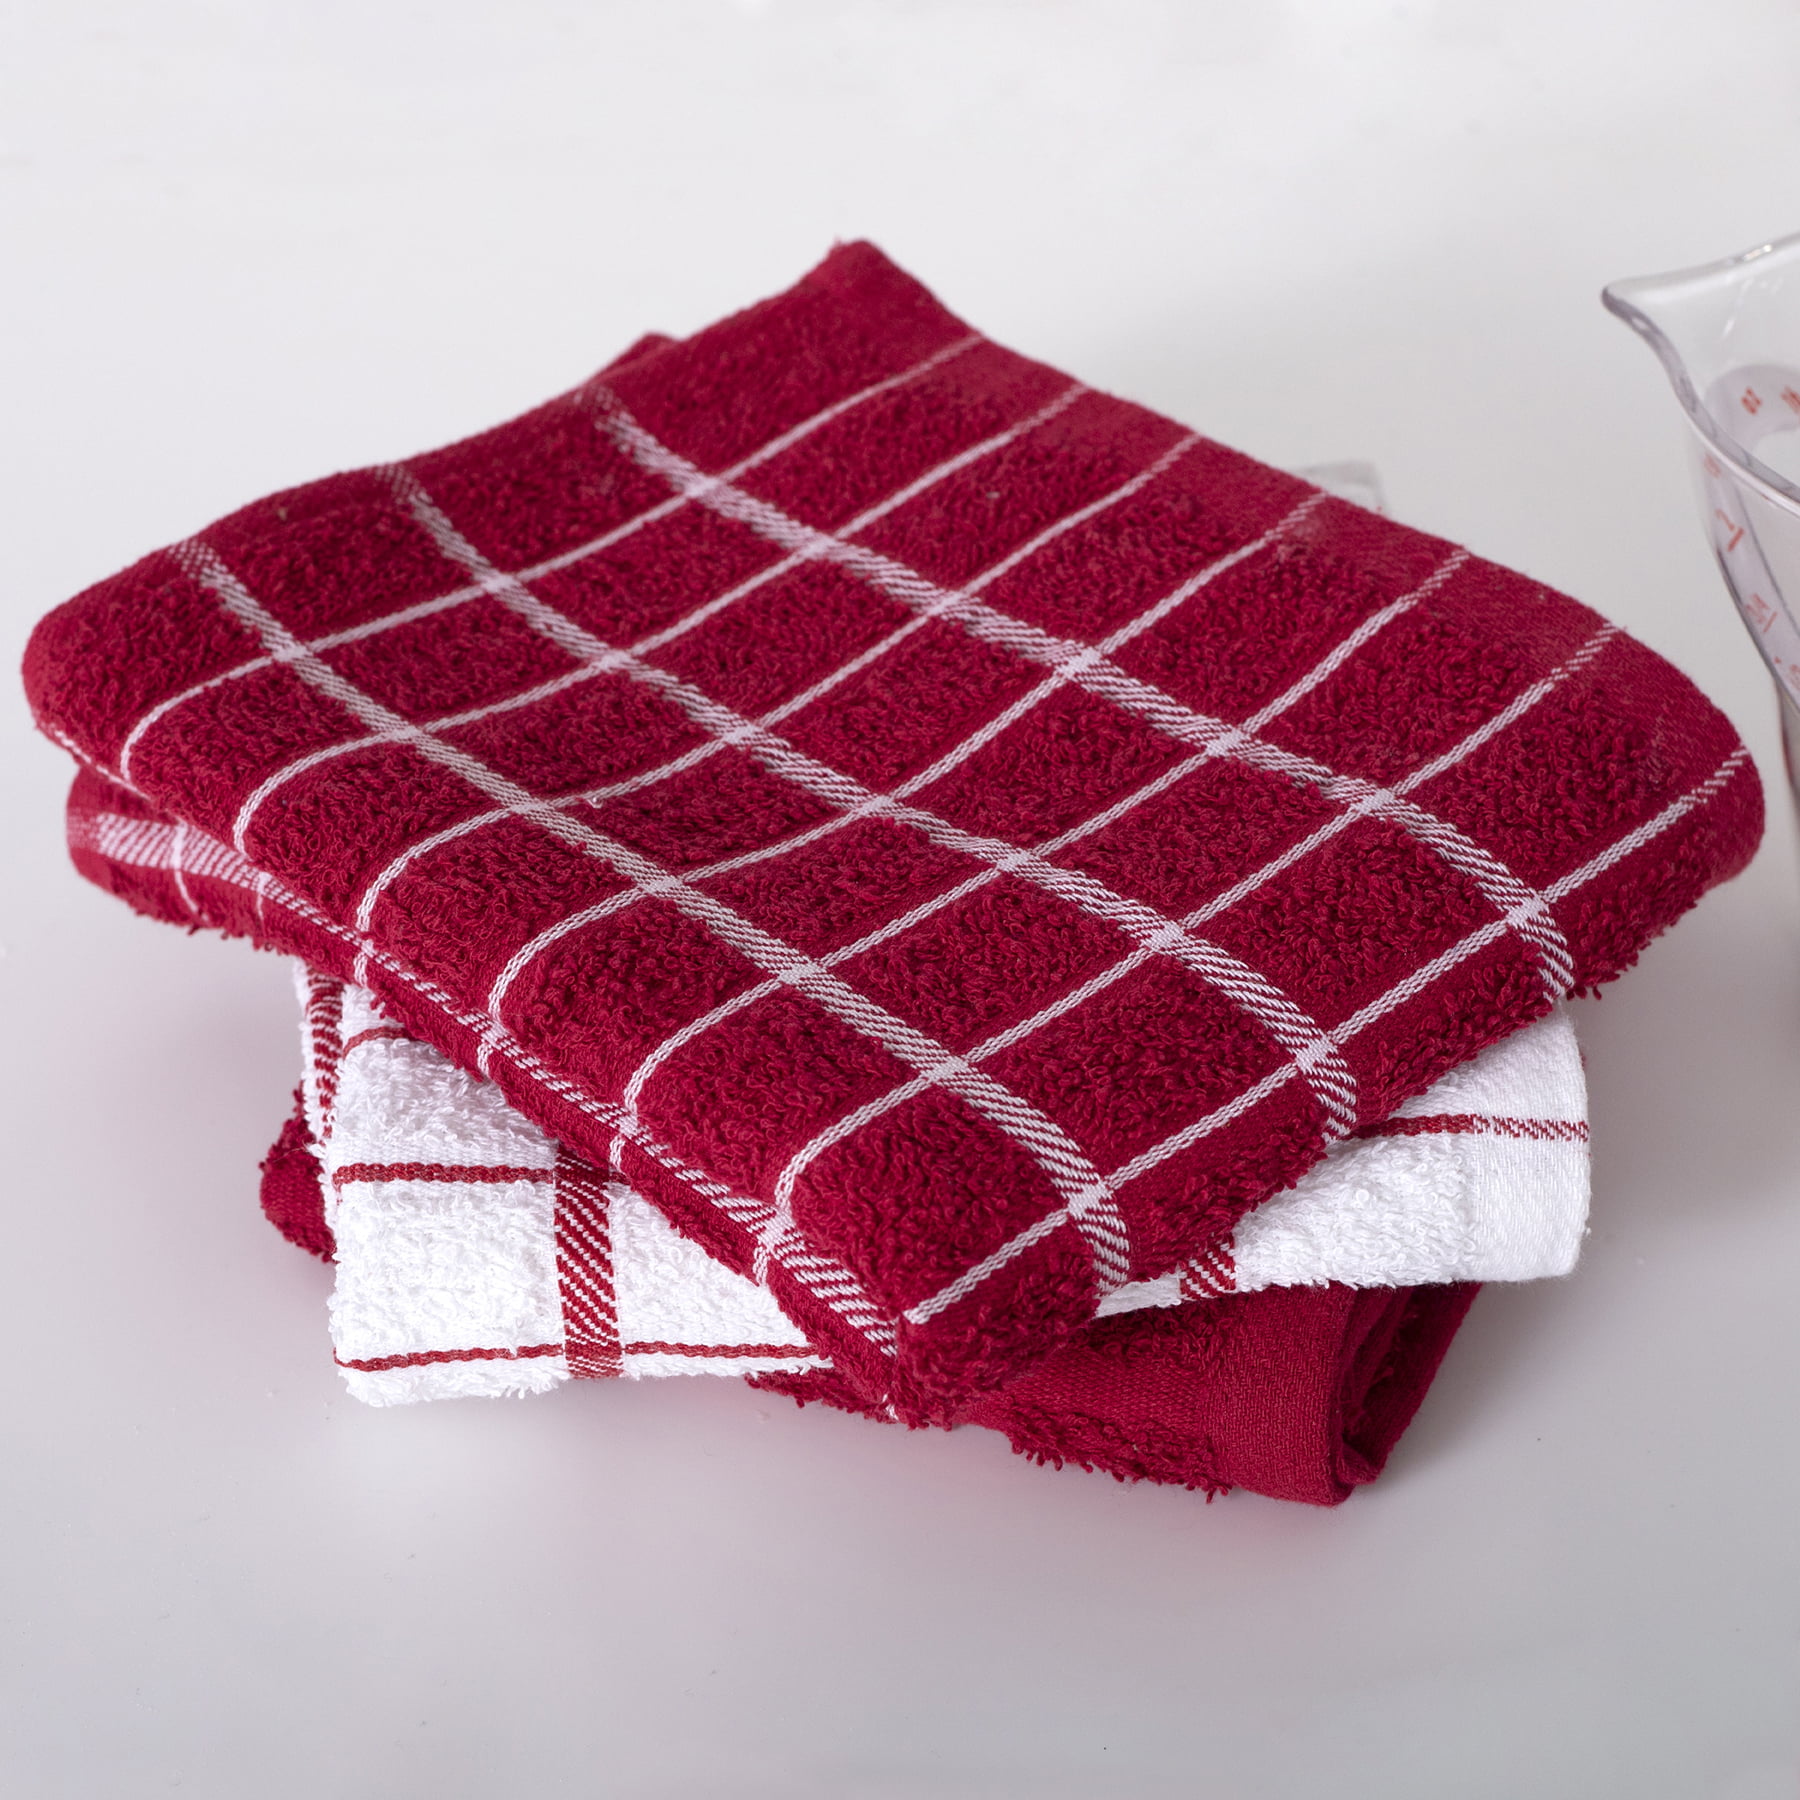 Fun RITZ Thankful for Fat Pants Kitchen Towels Sweatpants Bath Hand Towels